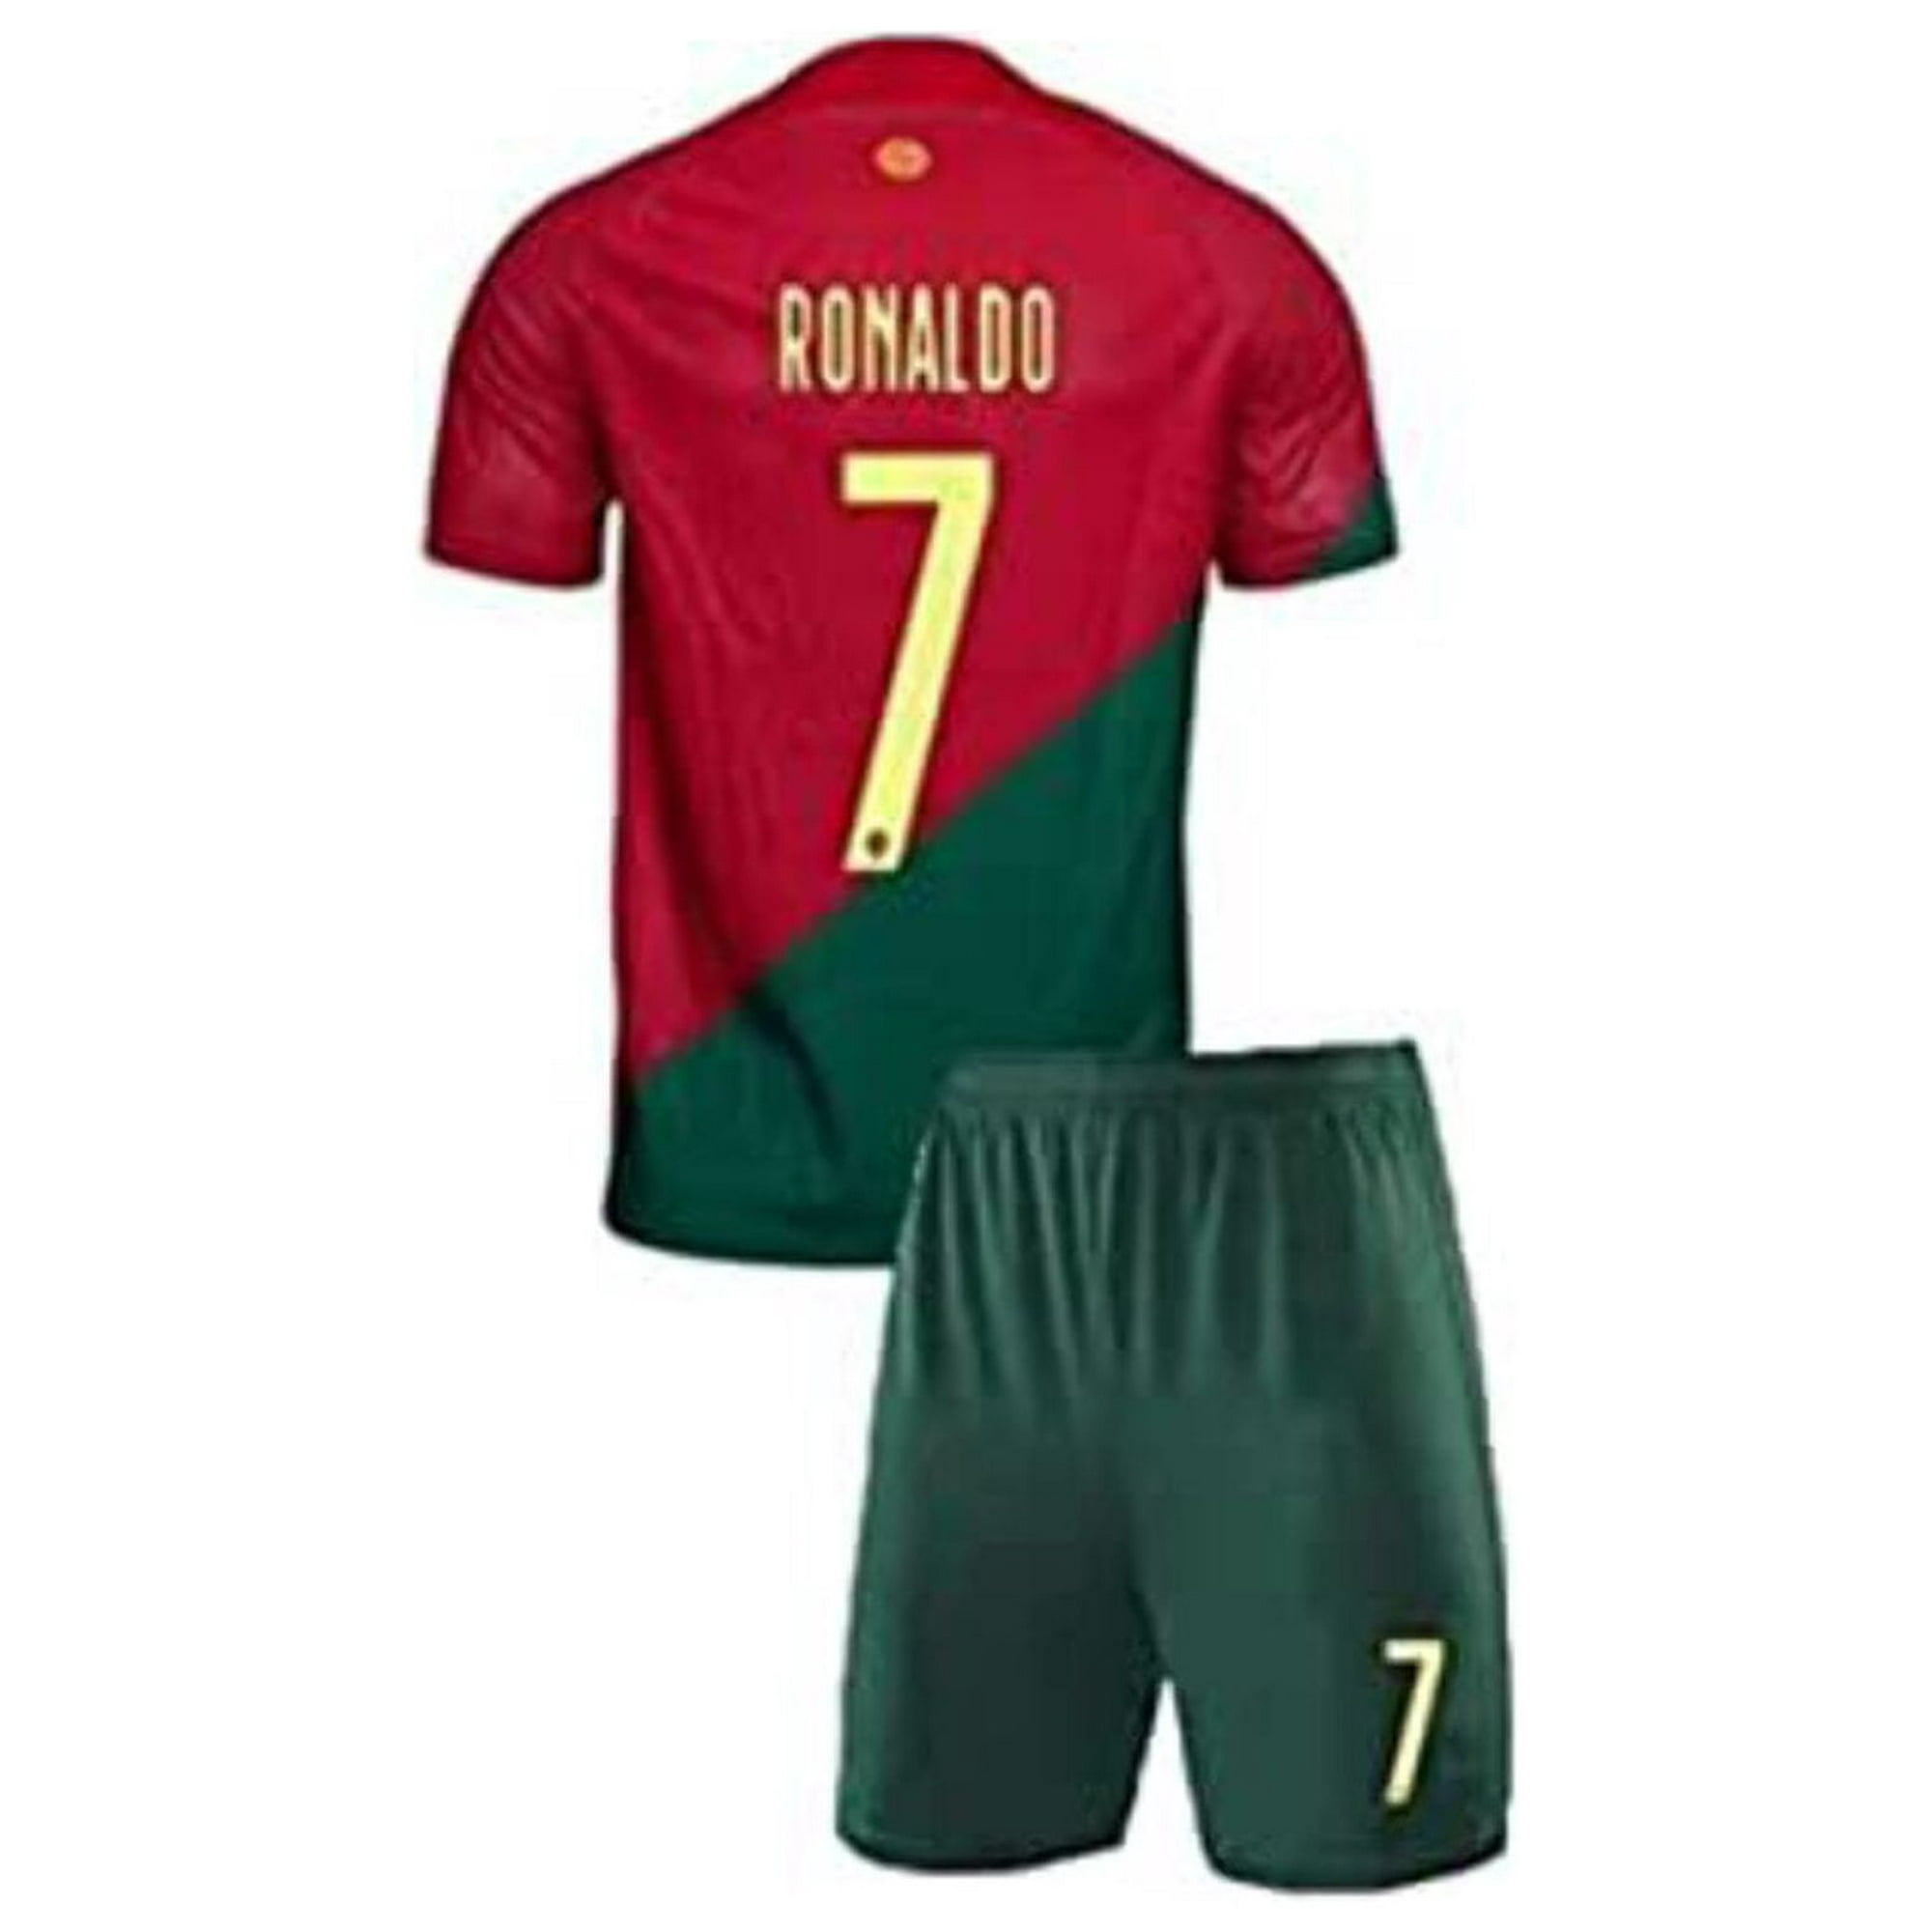 ronaldo jersey 7